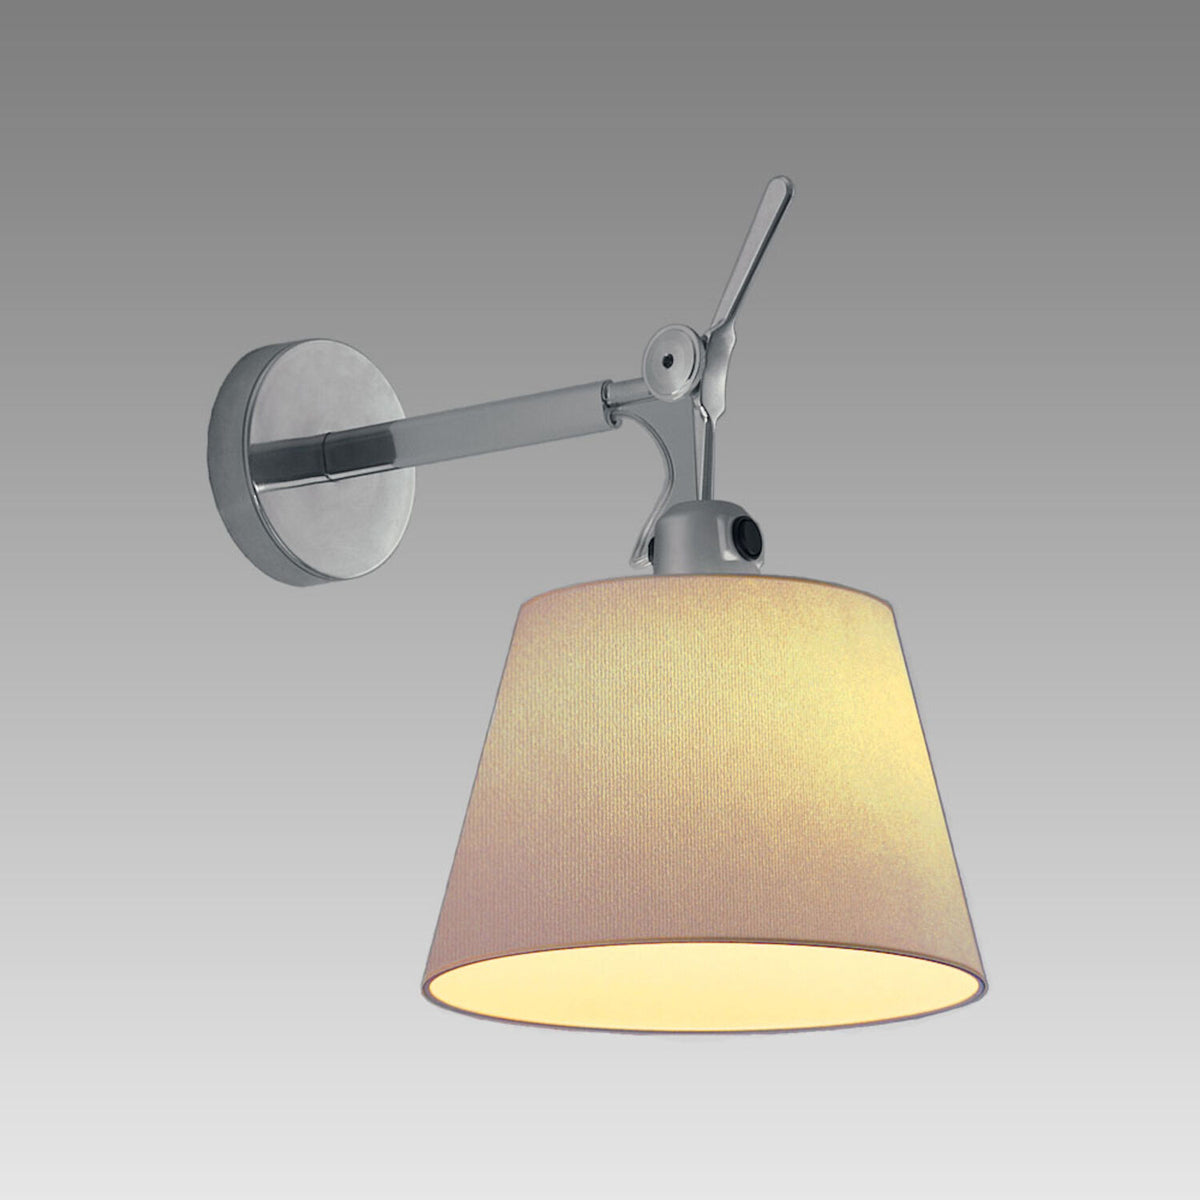 TOLOMEO WALL LAMP WITH 12-INCH SHADE